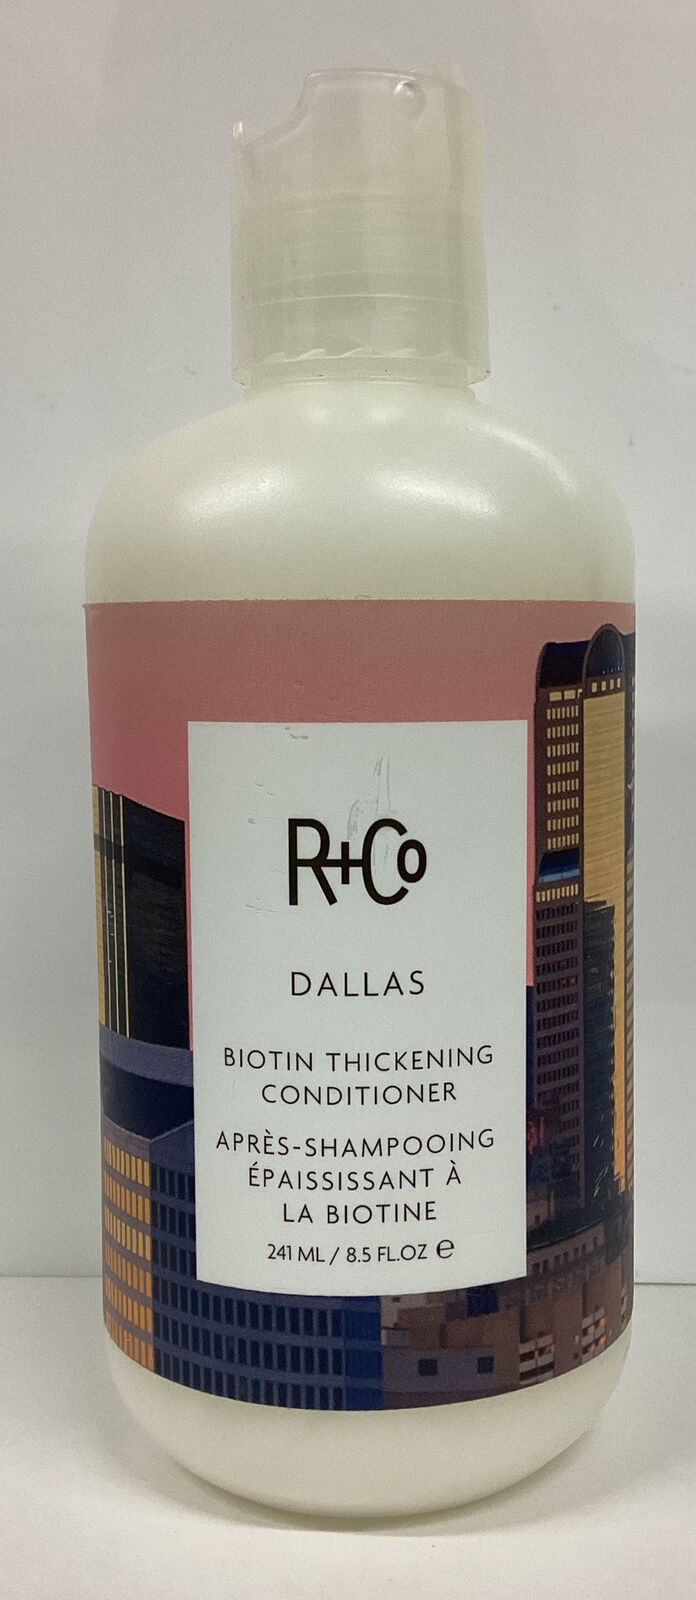 R+CO Dallas Biotin Thickening Conditioner 8.5 oz not sealed.